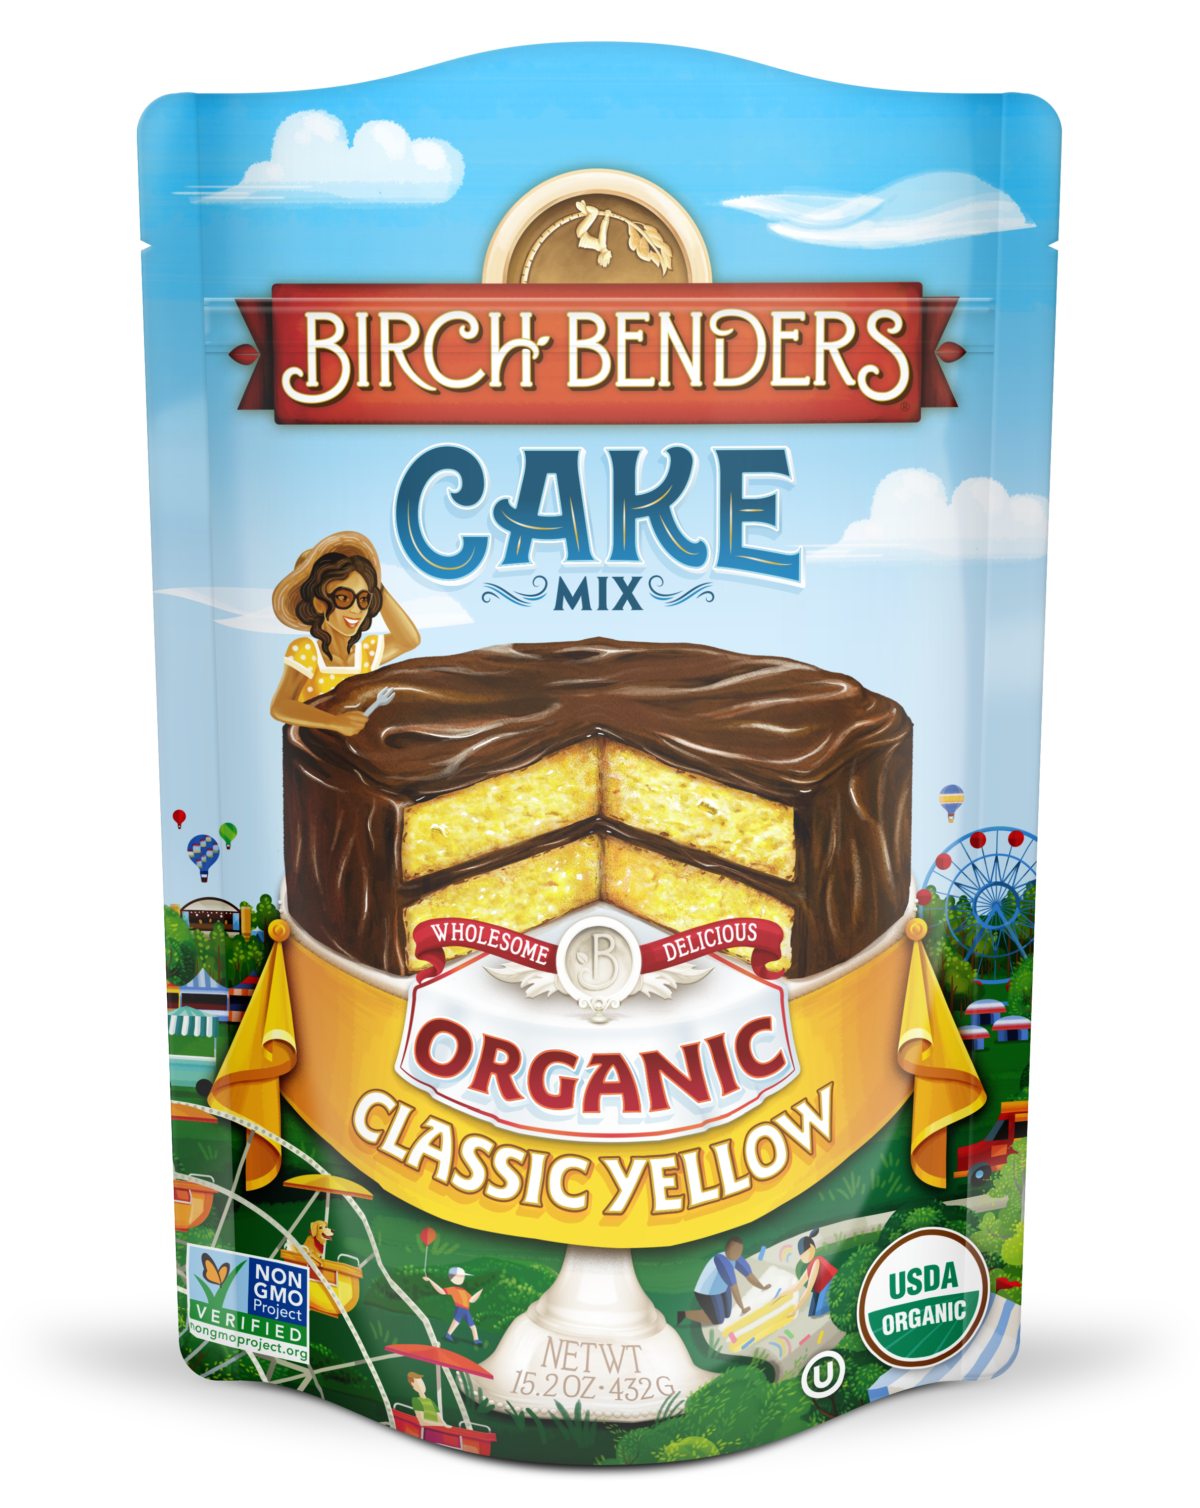 Organic Classic Yellow Cake Mix - Birch Benders Recipes